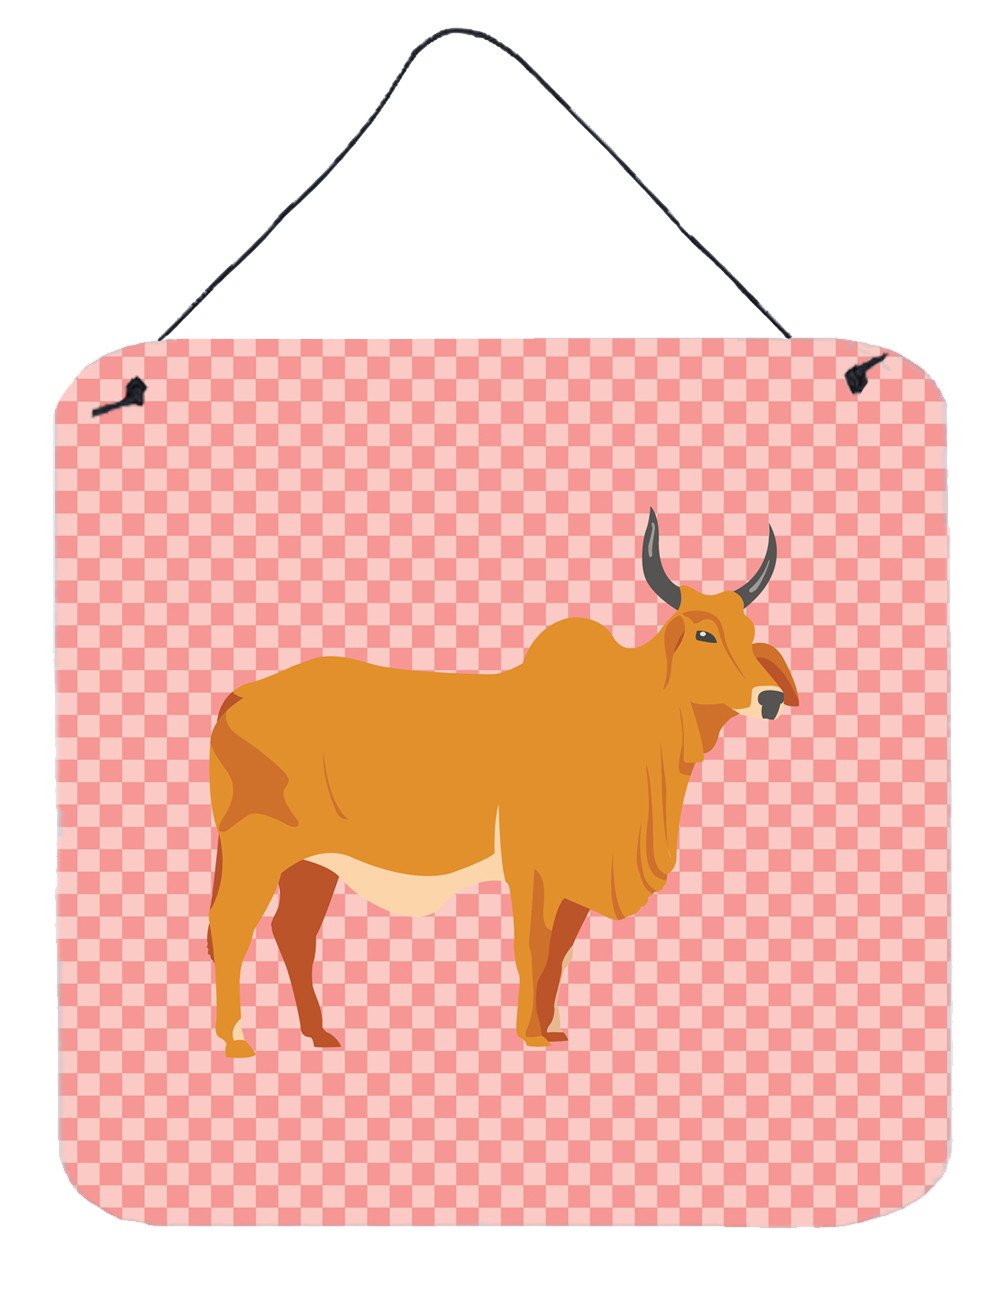 Zebu Indicine Cow Pink Check Wall or Door Hanging Prints BB7825DS66 by Caroline's Treasures